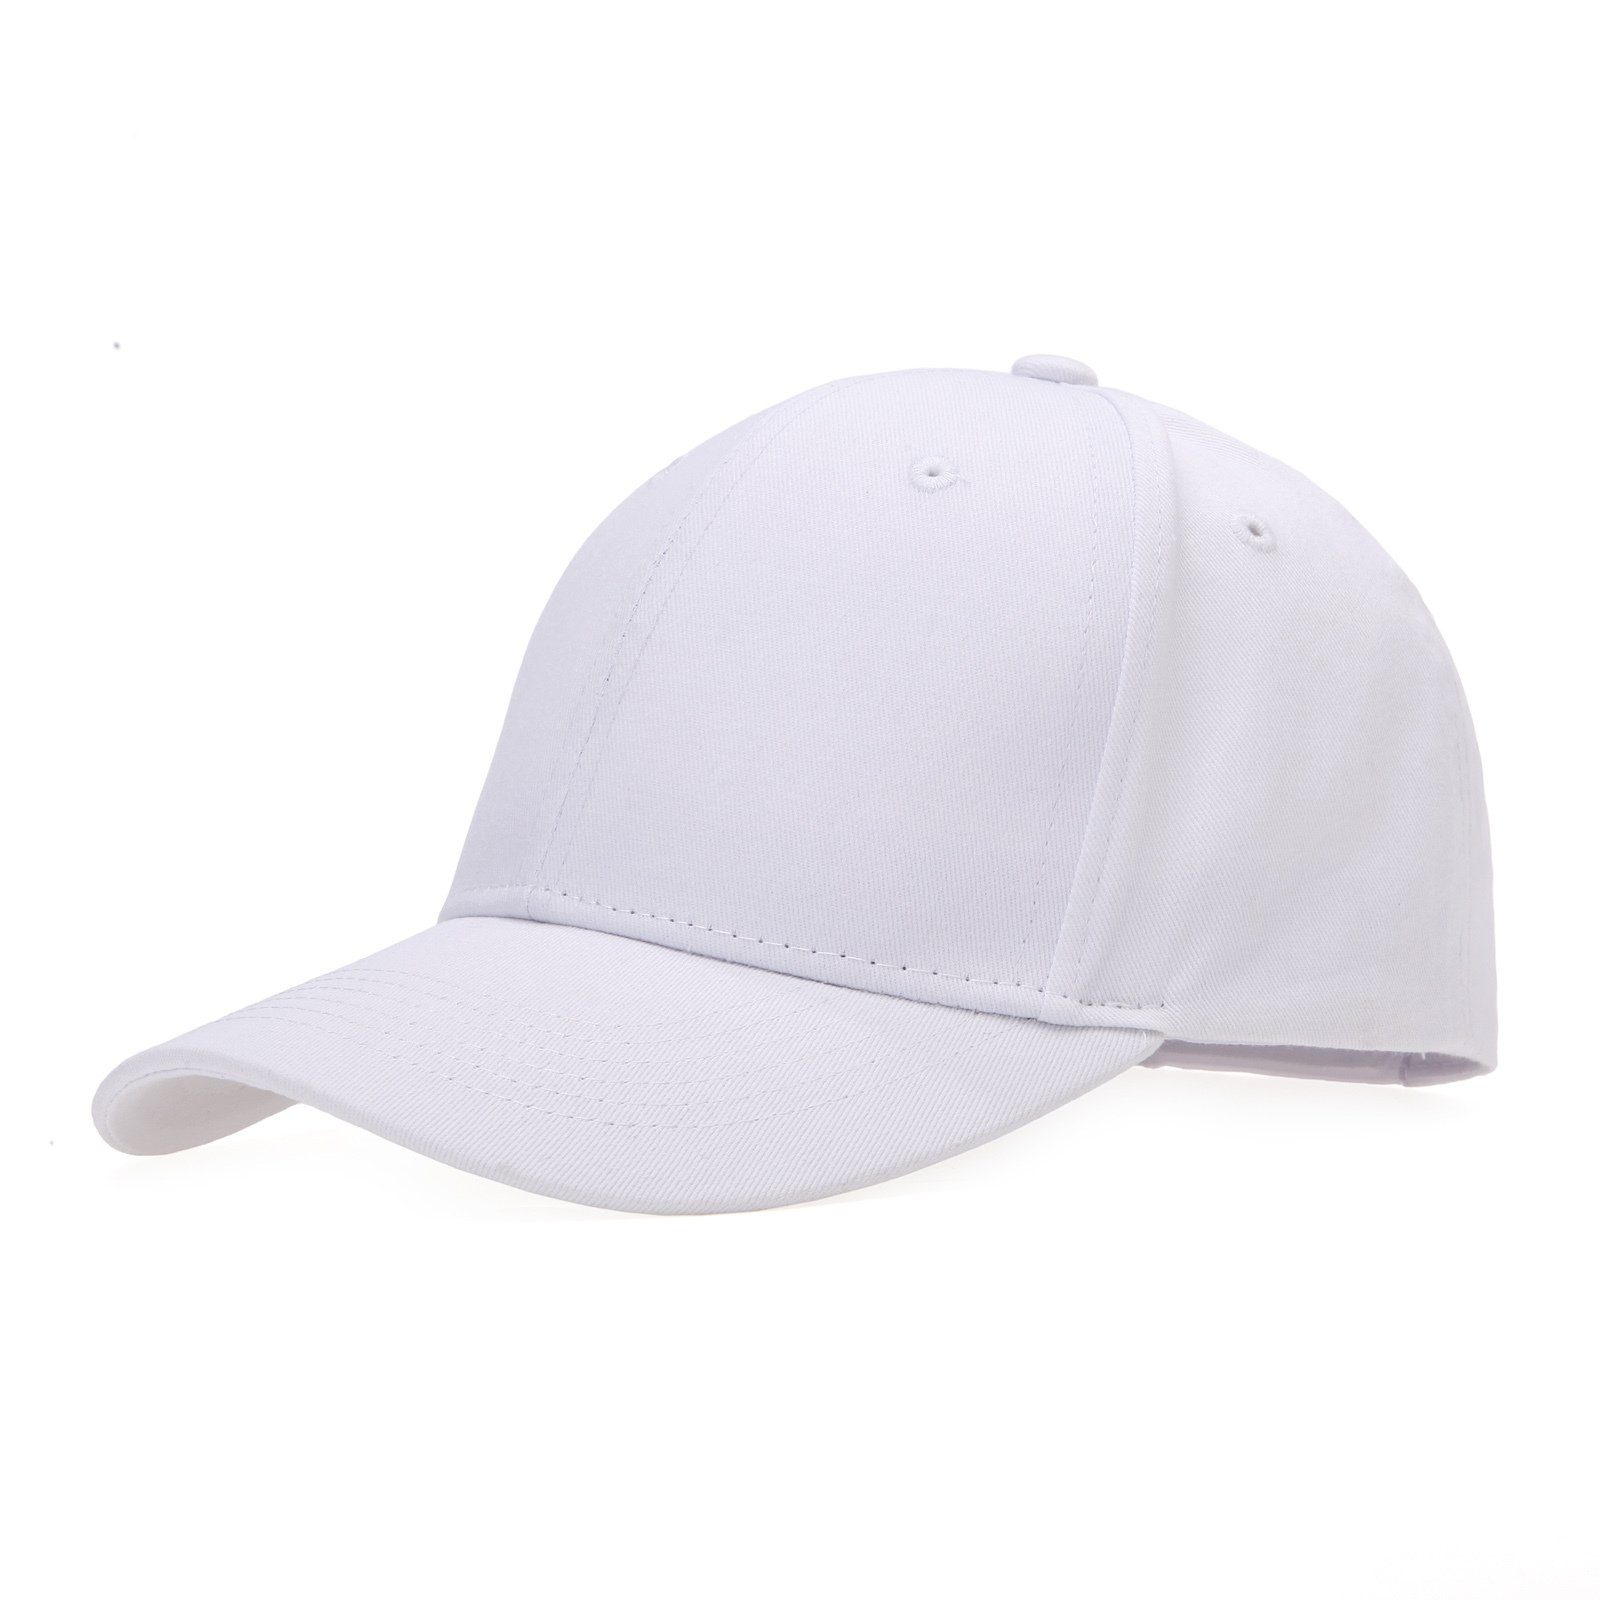 Weiße Baseball Caps online kaufen » Weiße Basecaps | OTTO | Baseball Caps